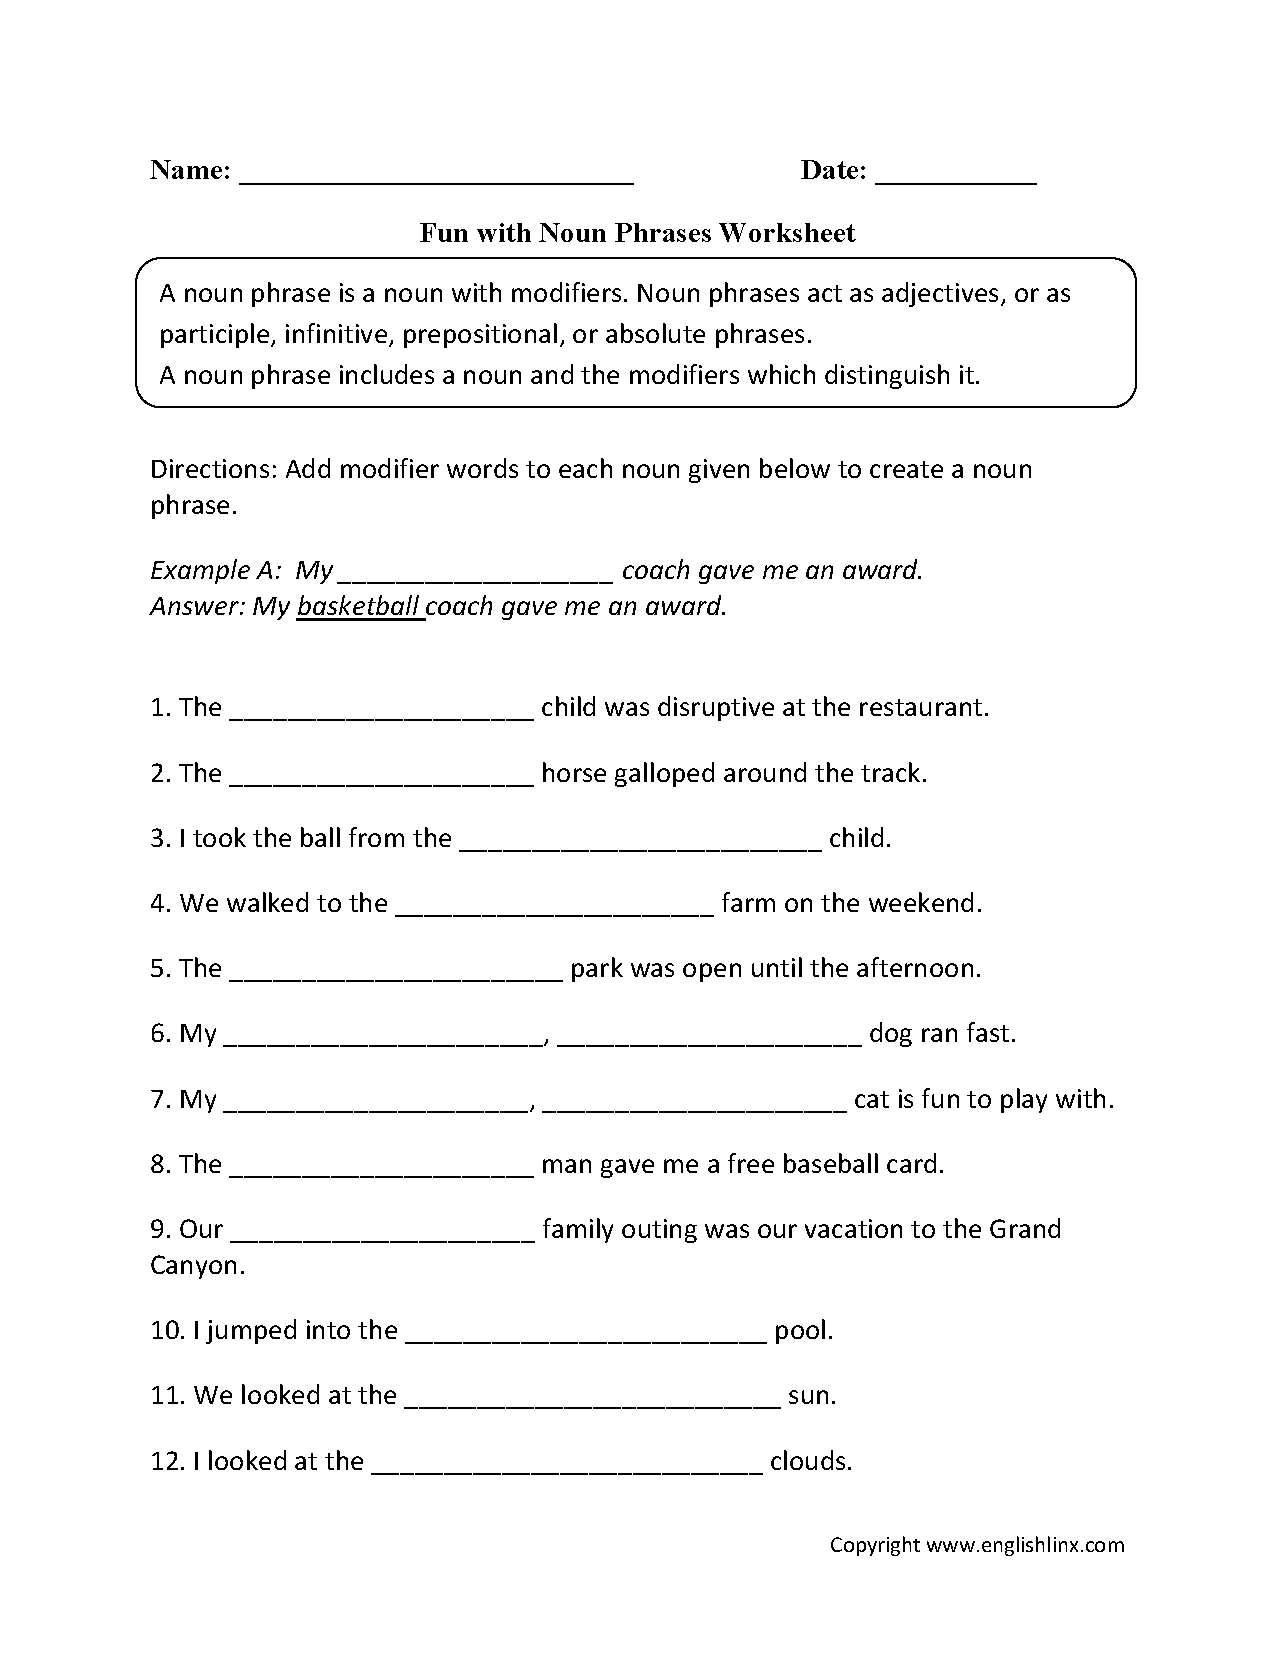 nouns-worksheets-noun-phrases-worksheets